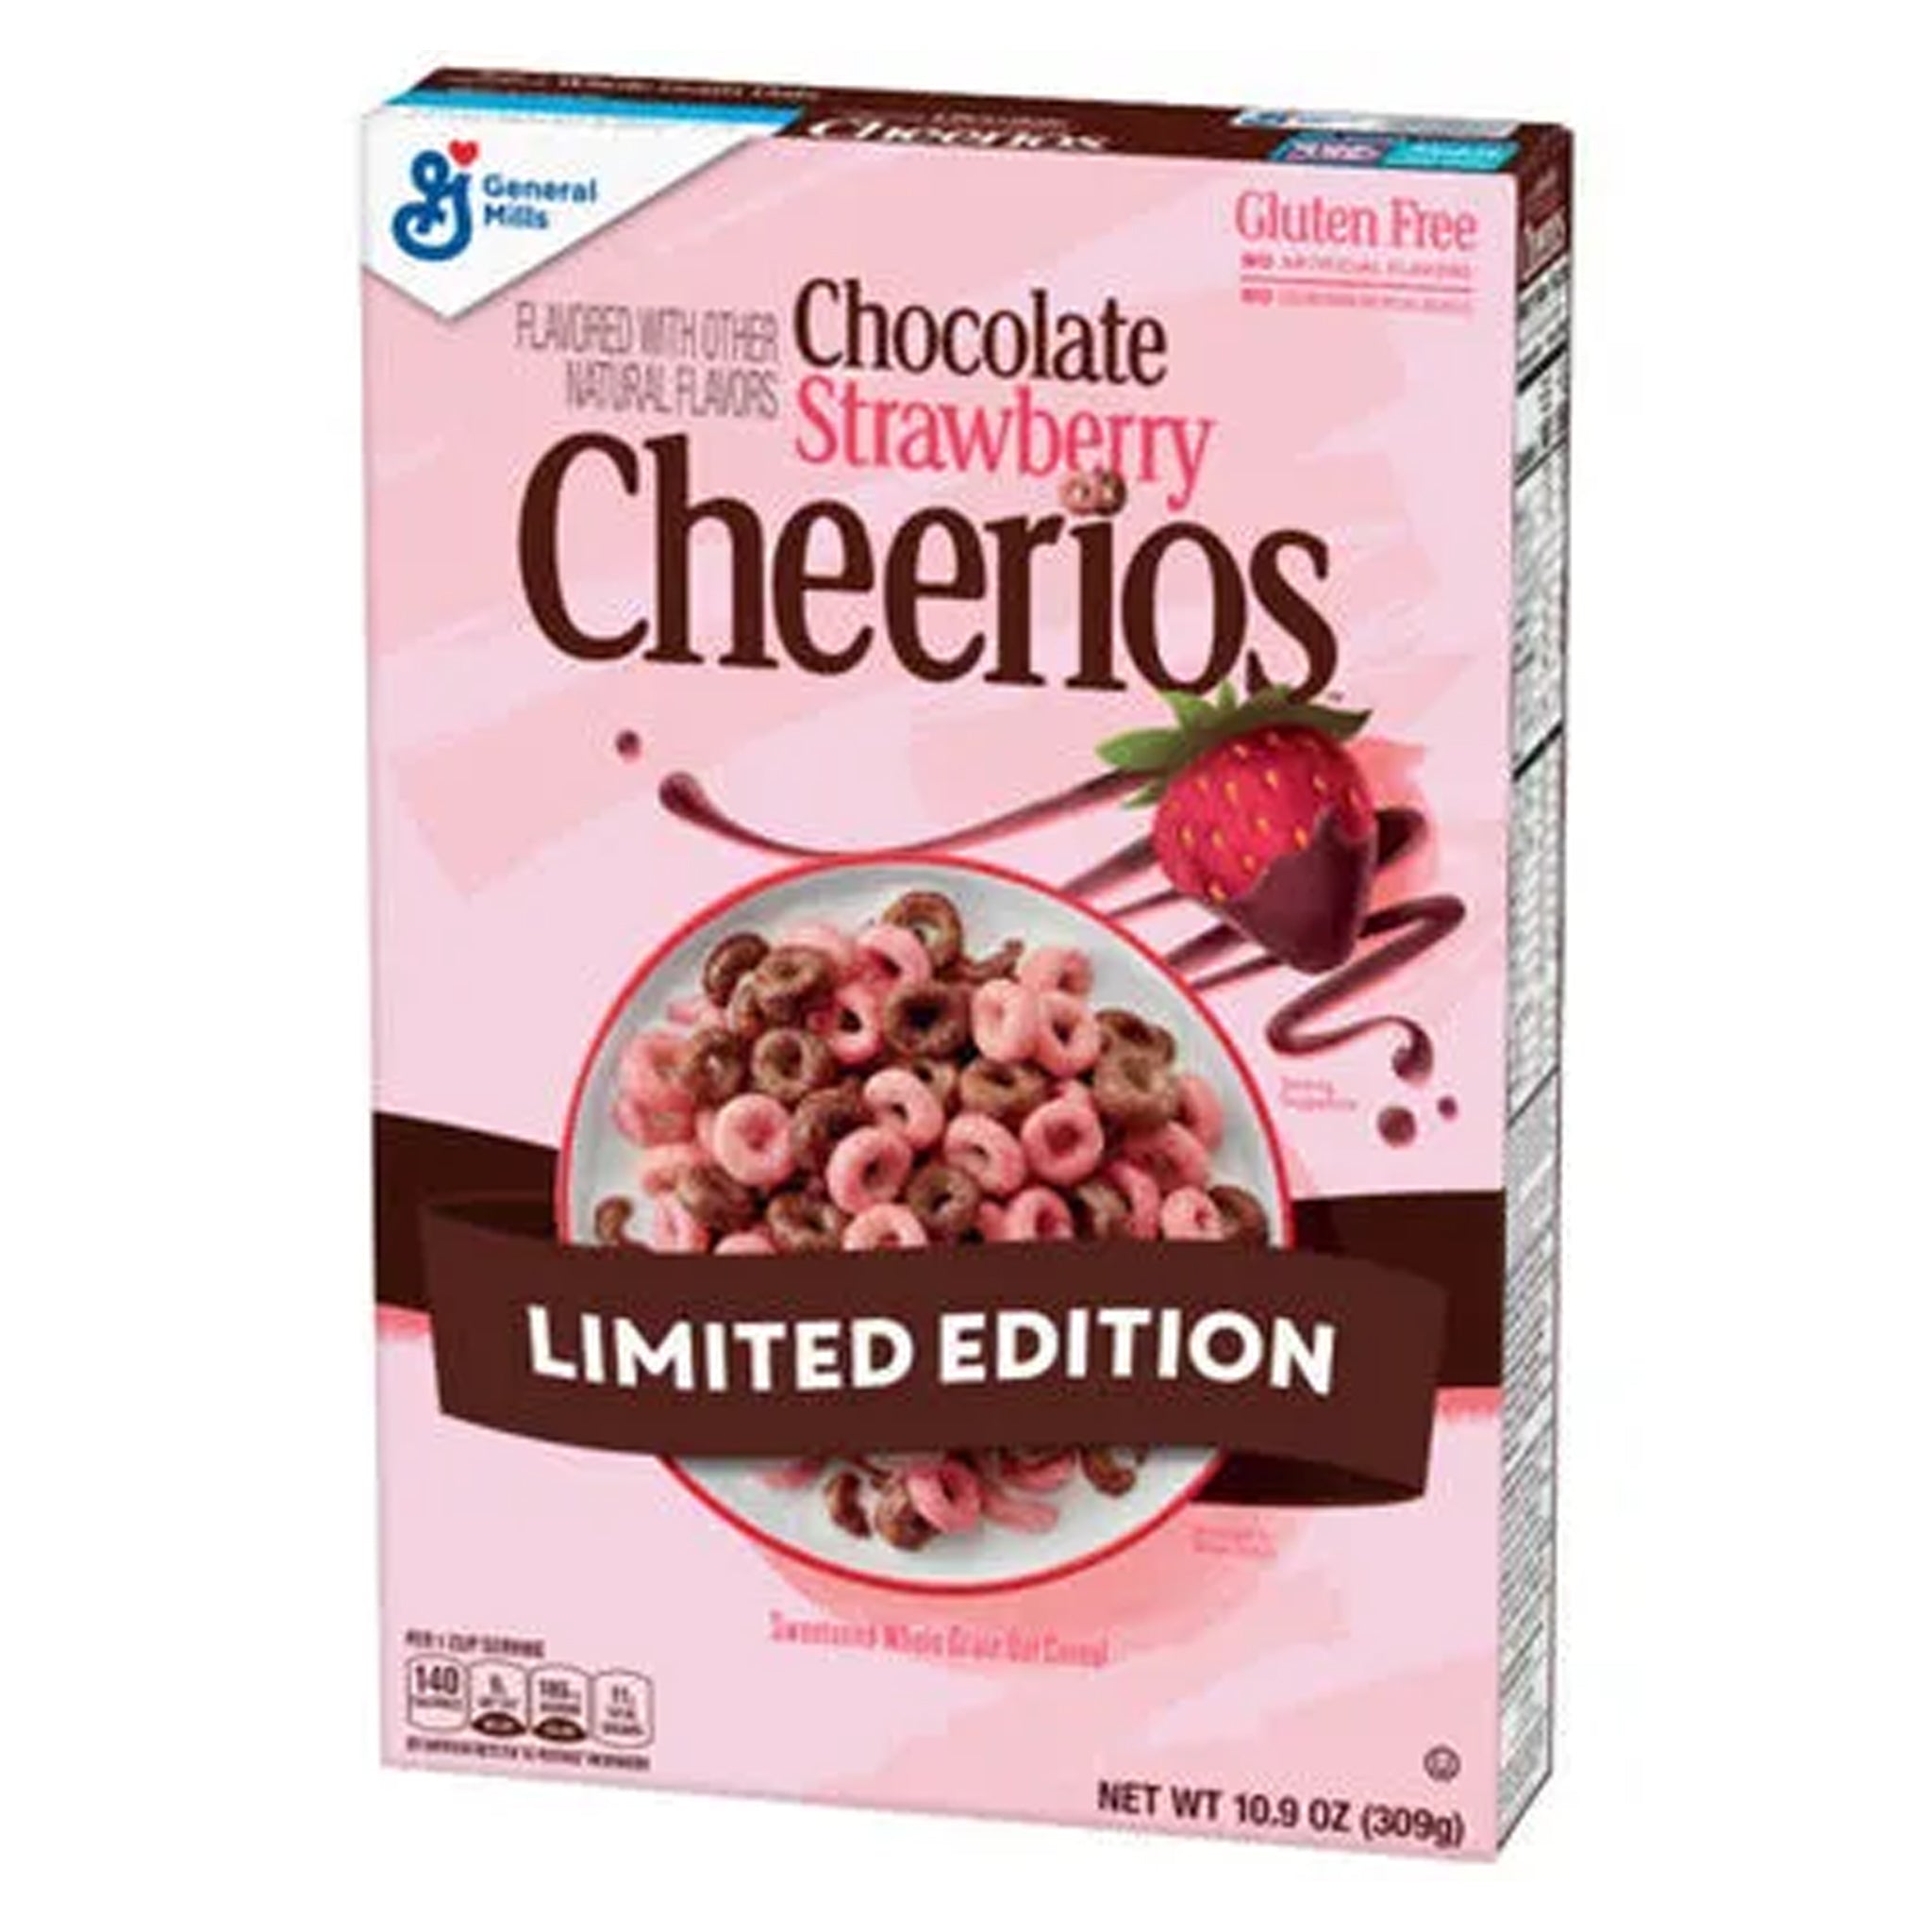 Cheerios Chocolate Strawberry Gluten Free צ'יריוס תות שוקולד מהדורה מוגבלת ללא גלוטן